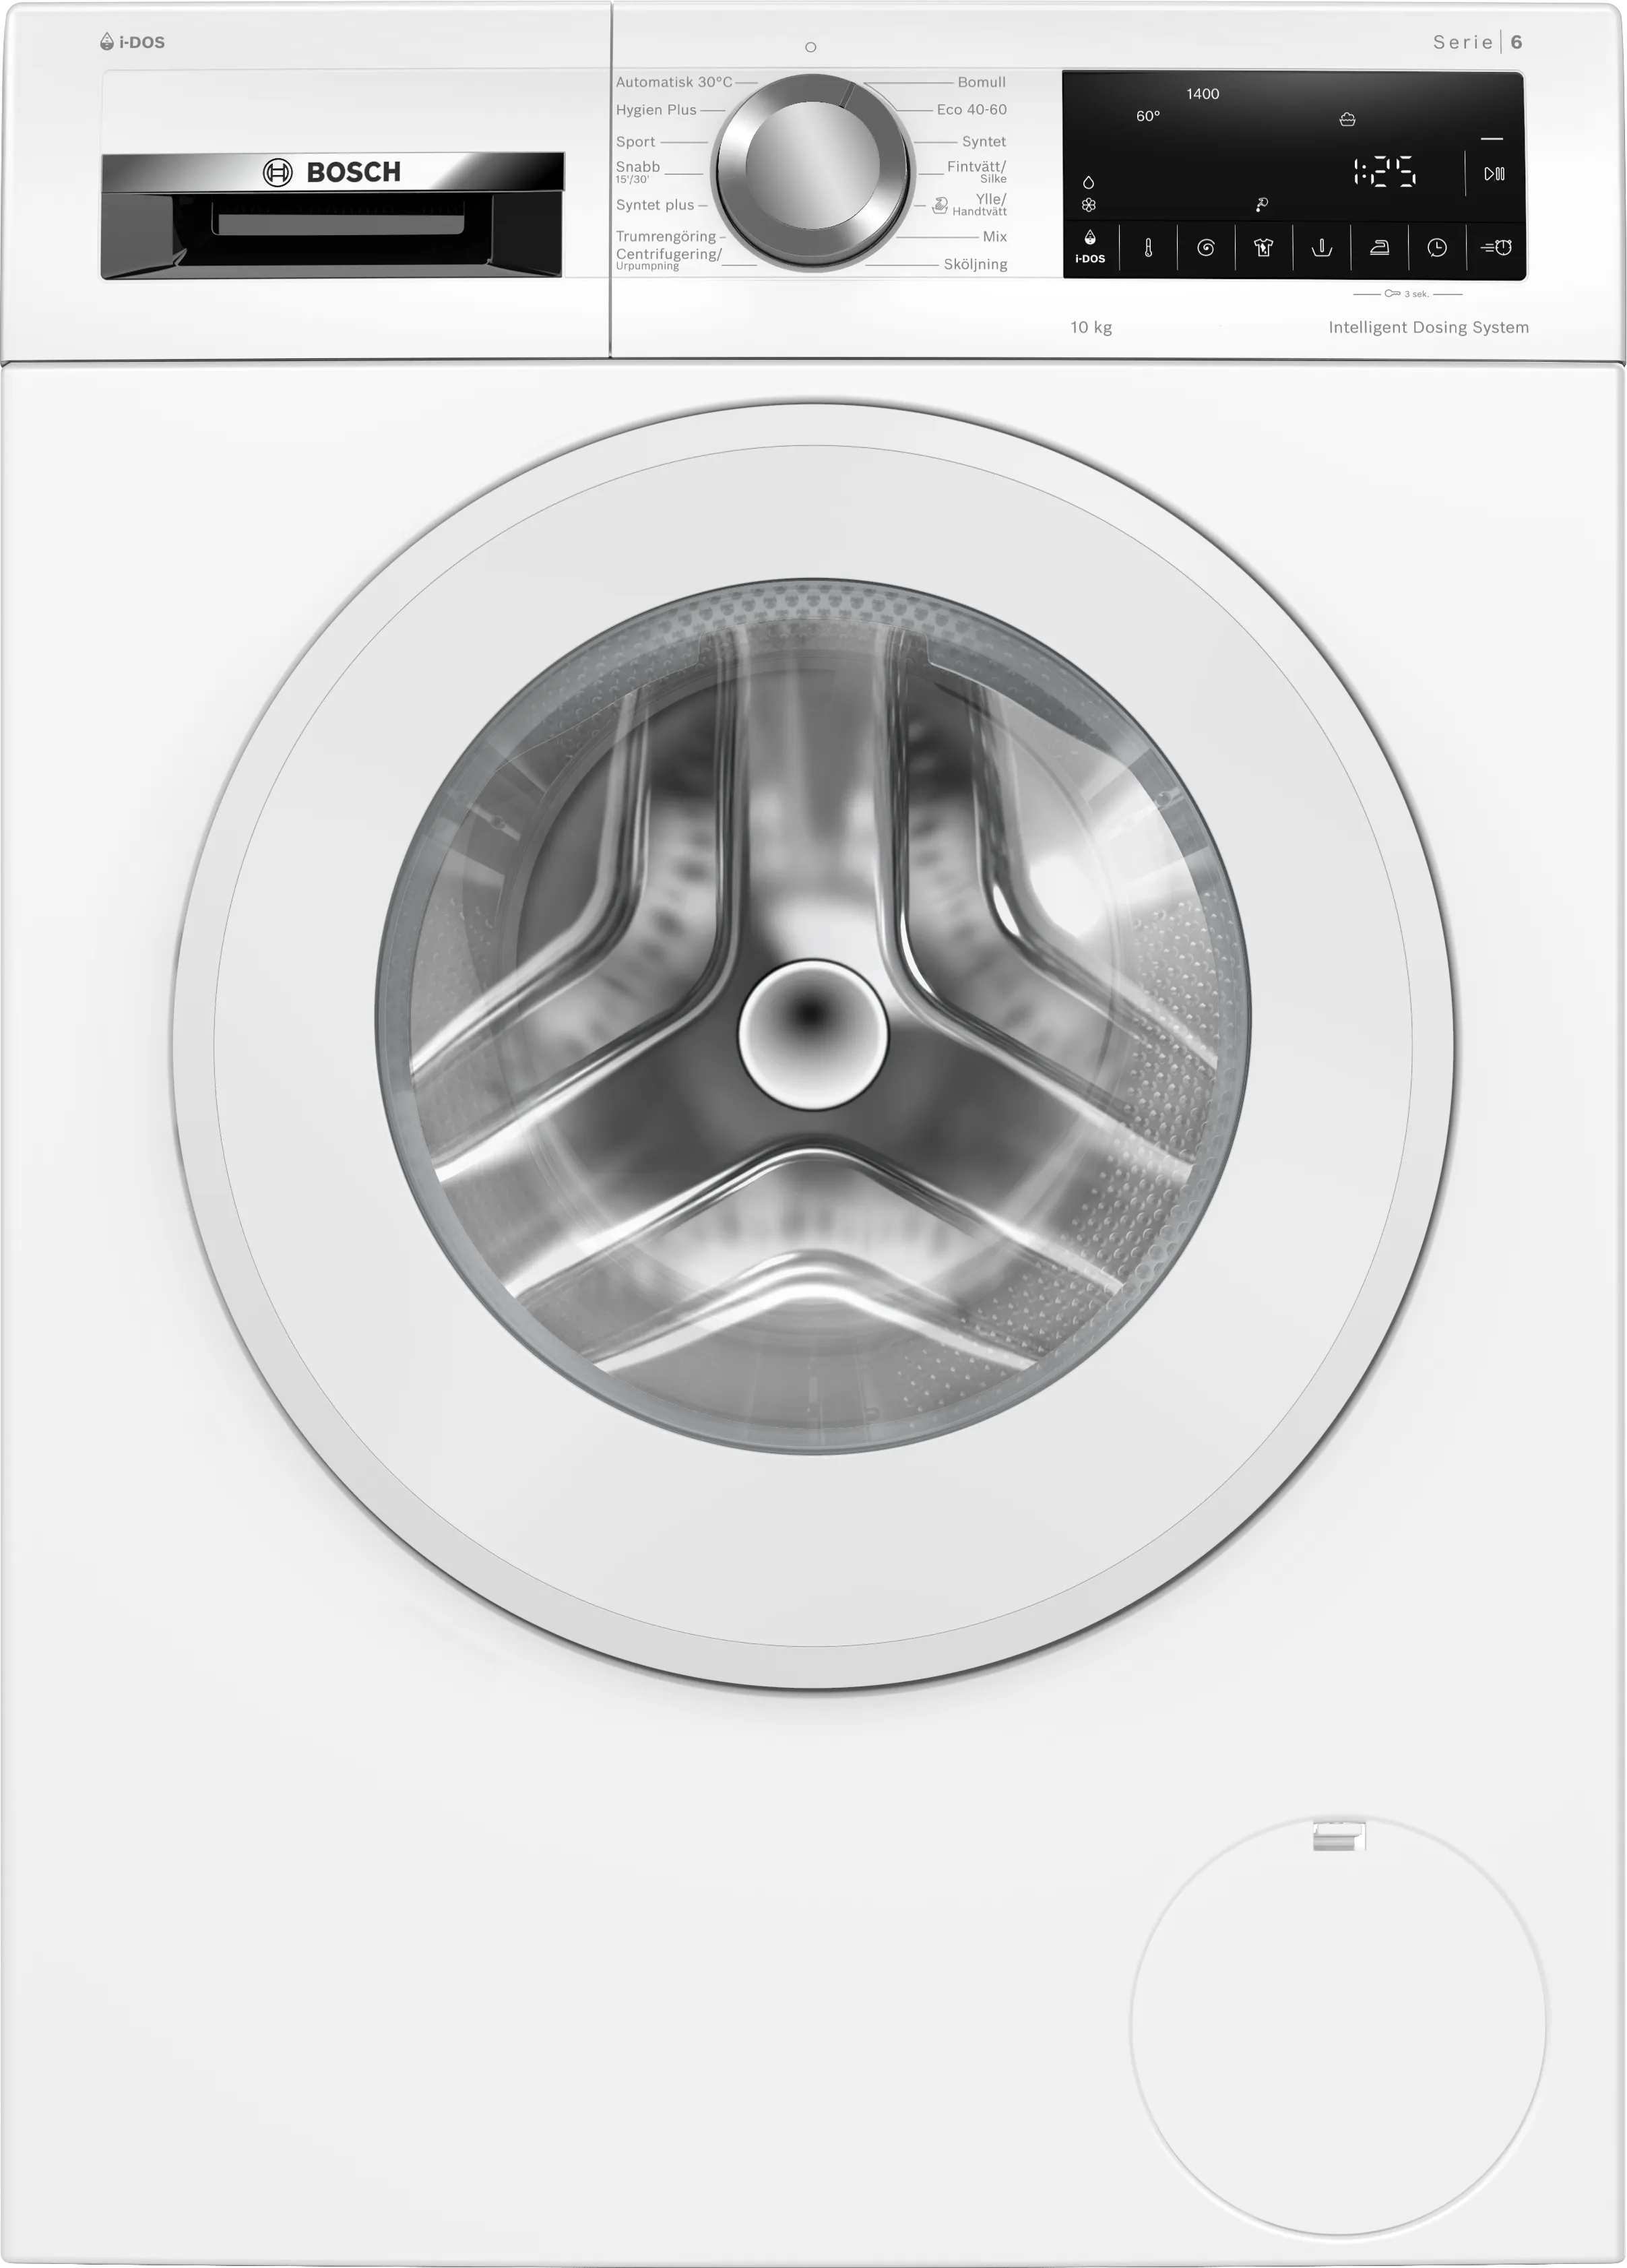 Series 6 washing machine, frontloader fullsize 10 kg 1400 rpm 